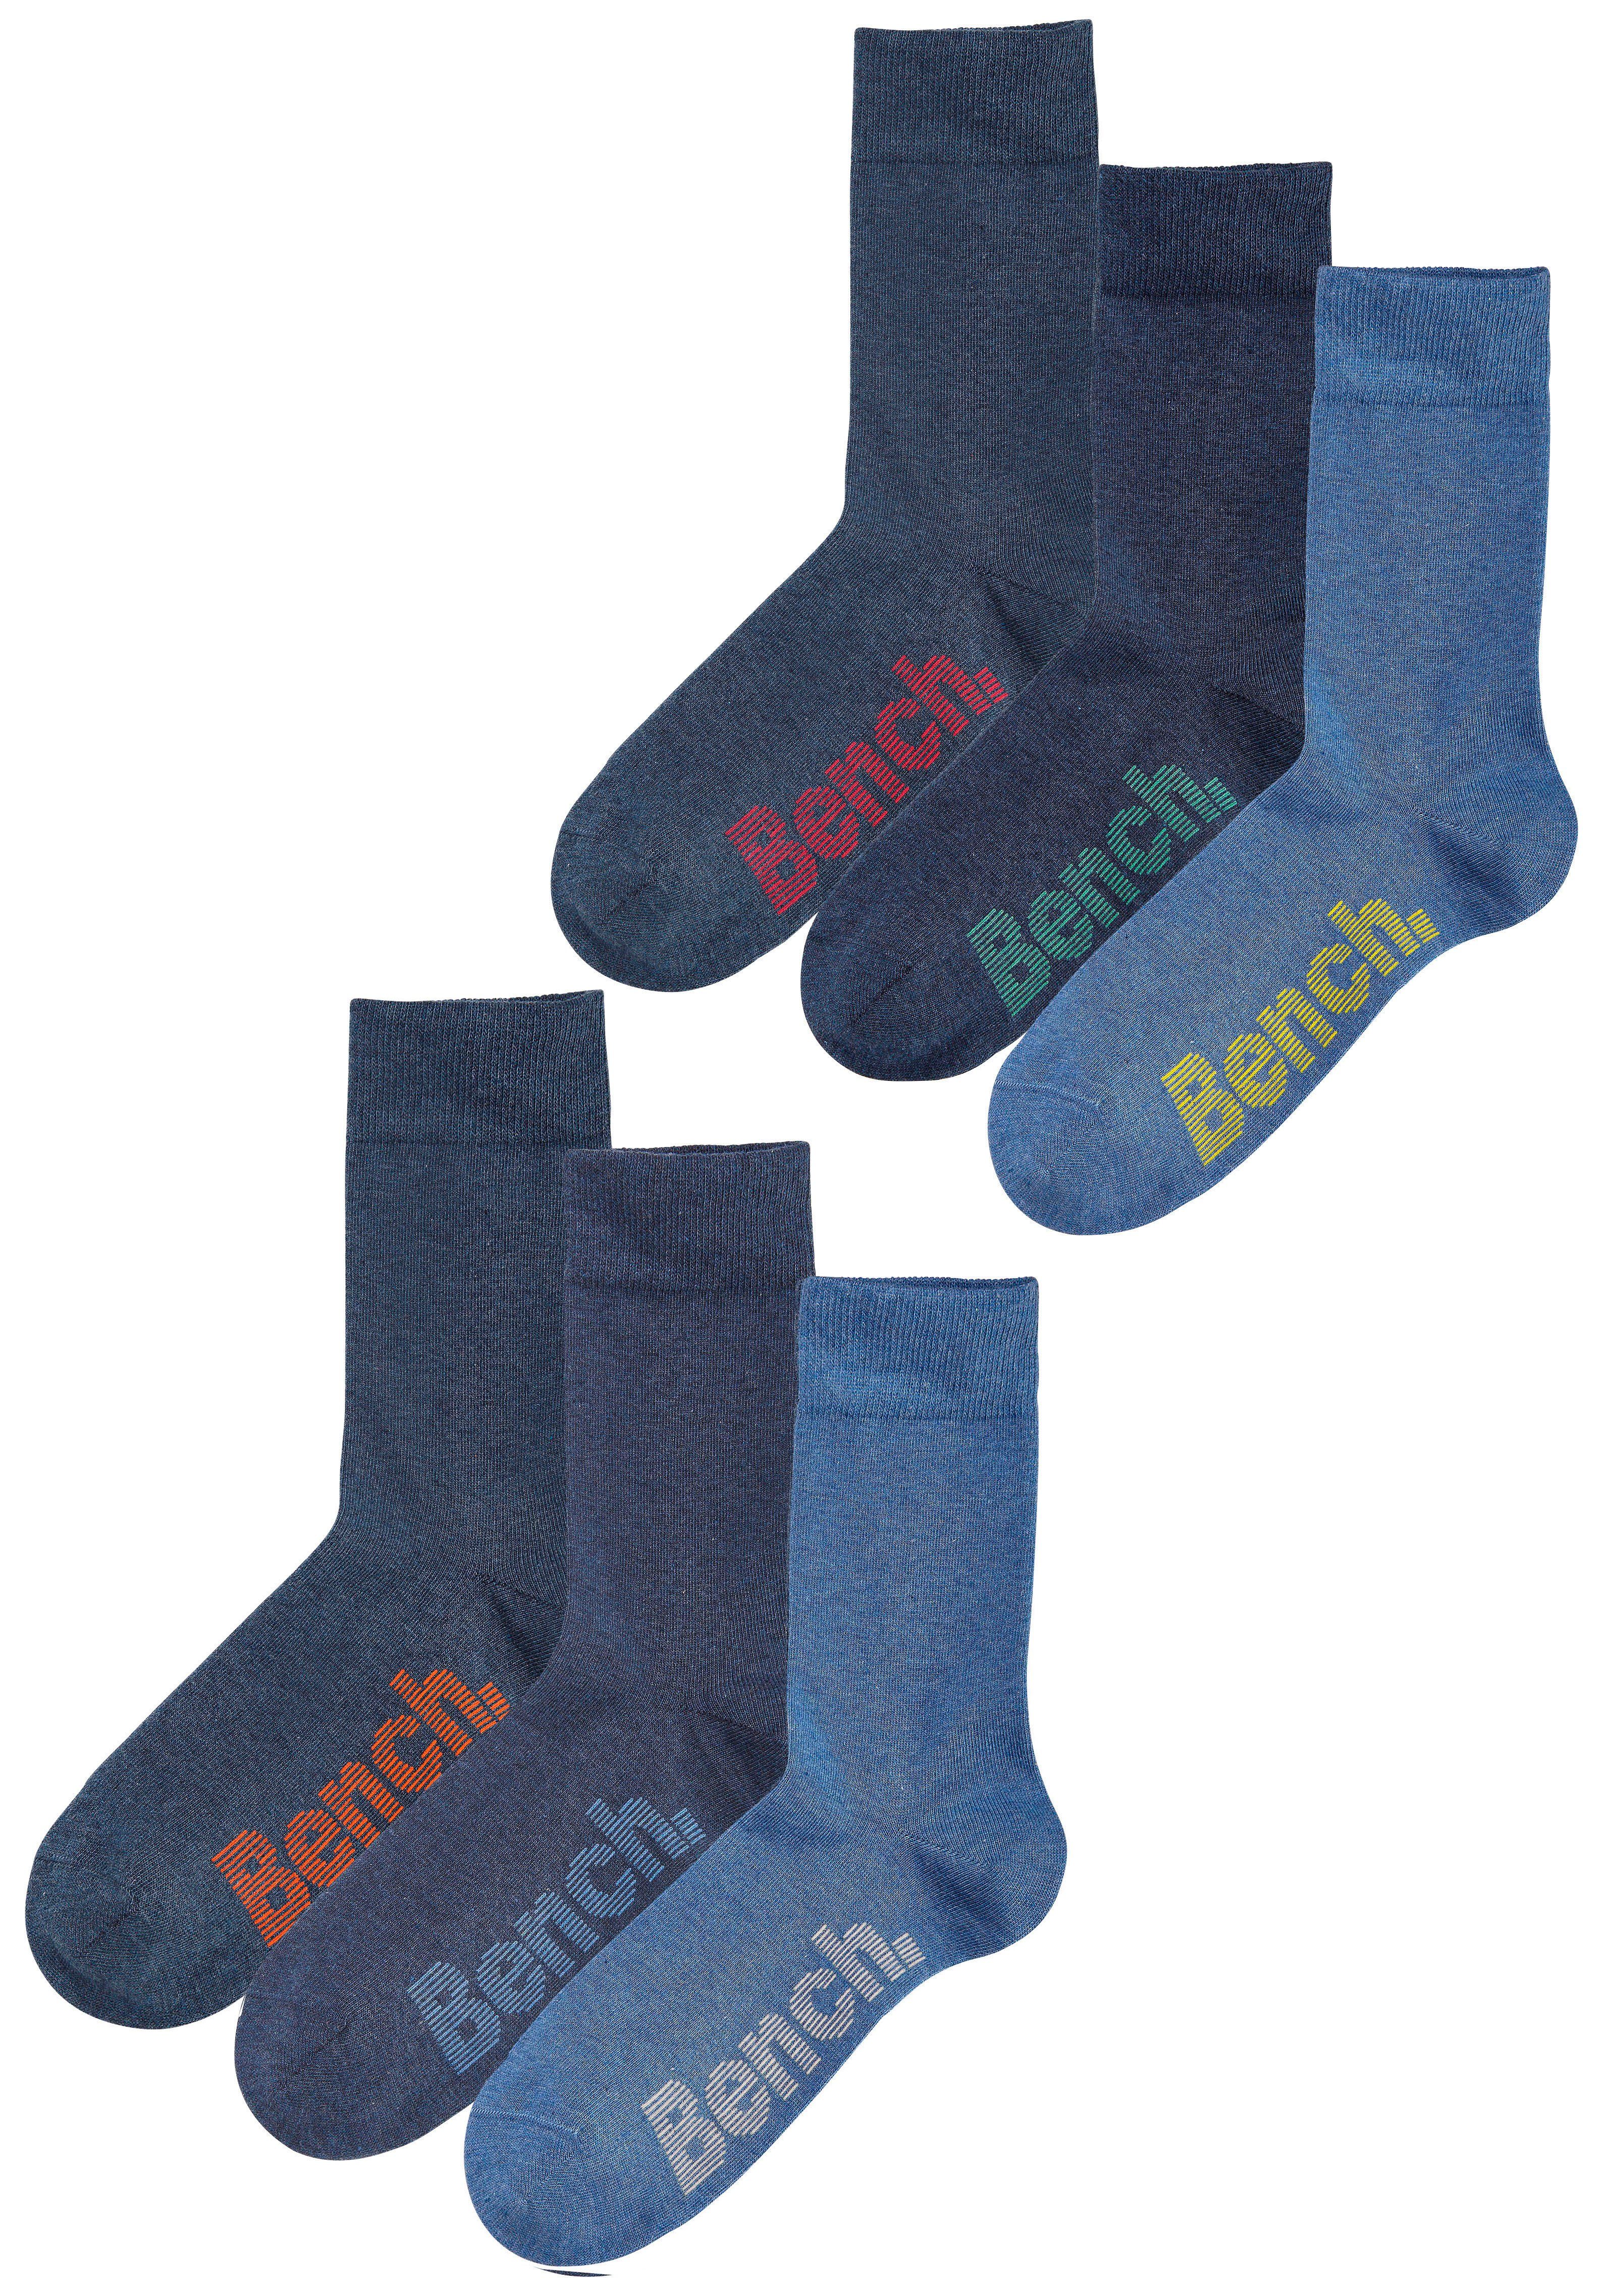 Bench. Socken (Set, verschiedenfarbigen 6-Paar) Logos mit jeans-meliert